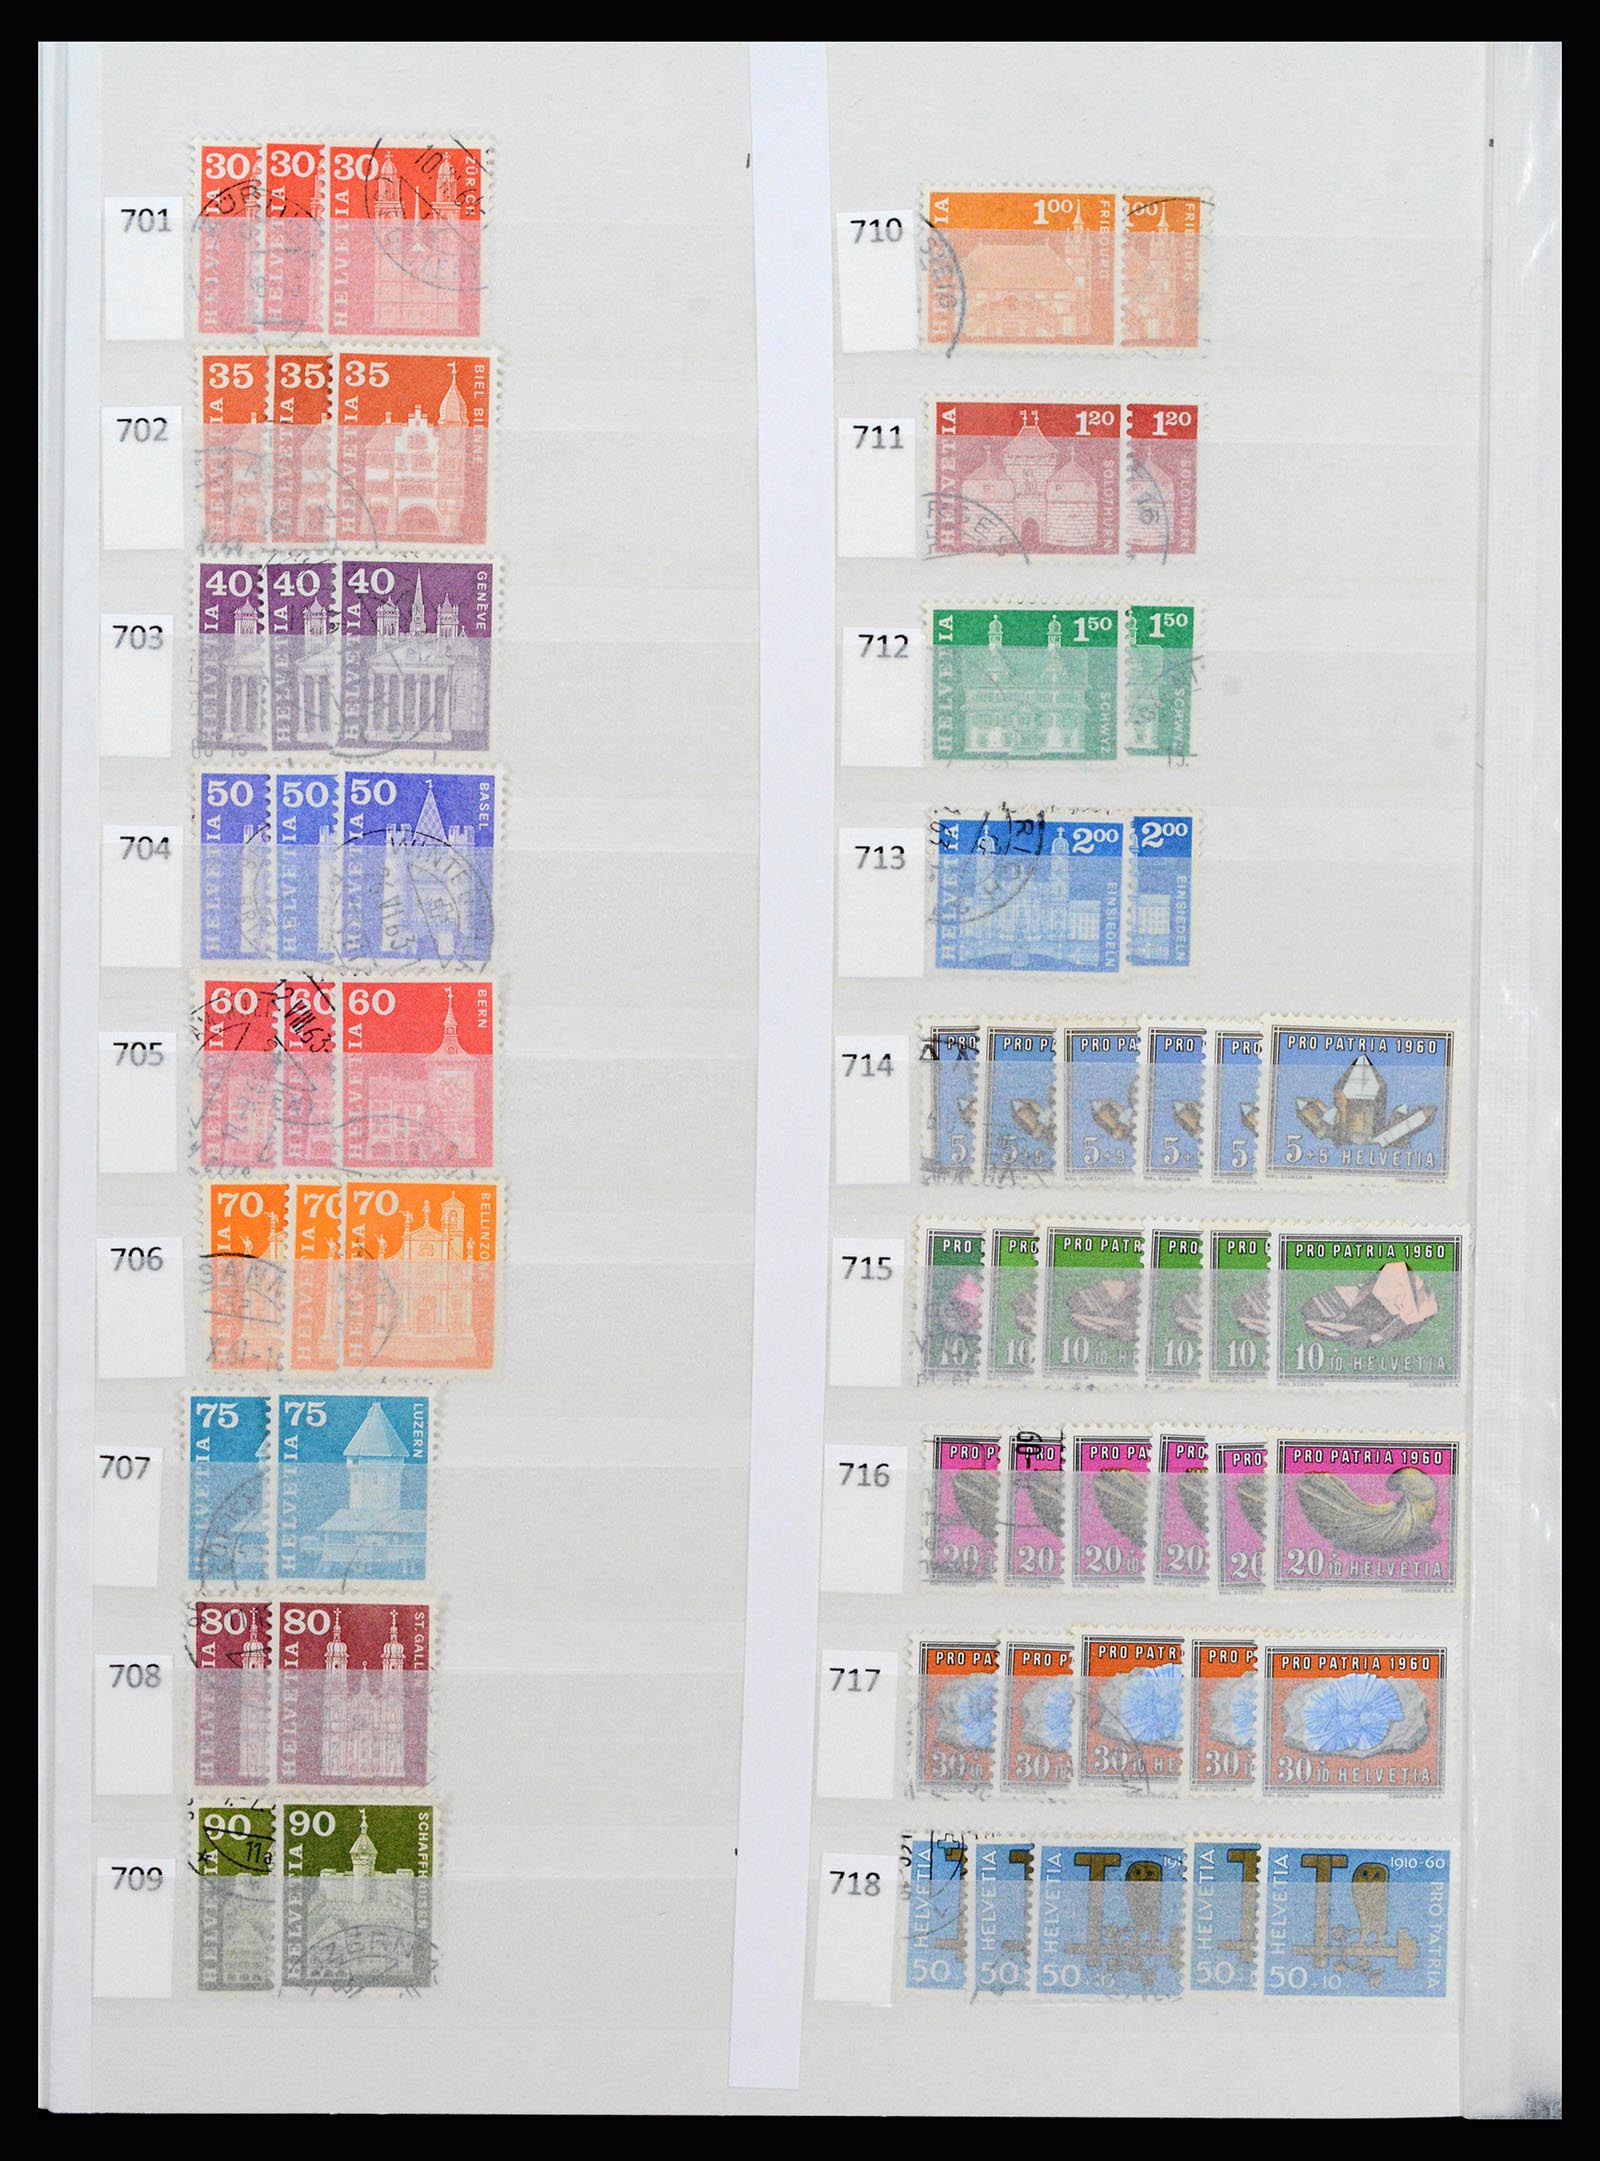 37252 037 - Stamp collection 37252 Switzerland 1900-2011.